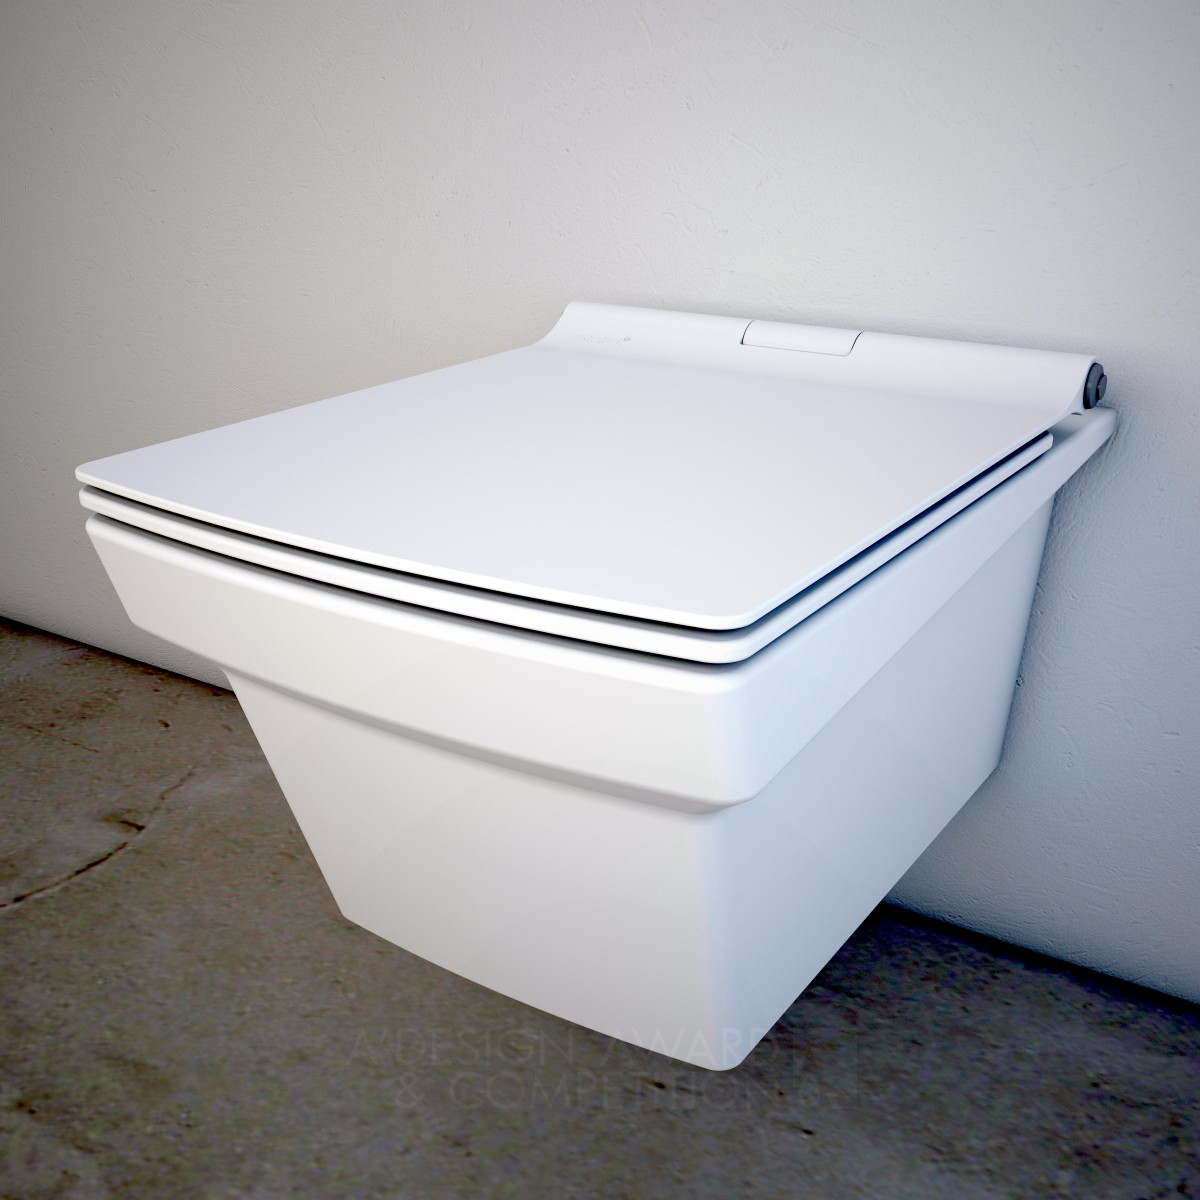 4Life Wall Hung WC Pan Wall hung WC Pan by Serel Design Team Iron Bathroom Furniture and Sanitary Ware Design Award Winner 2014 